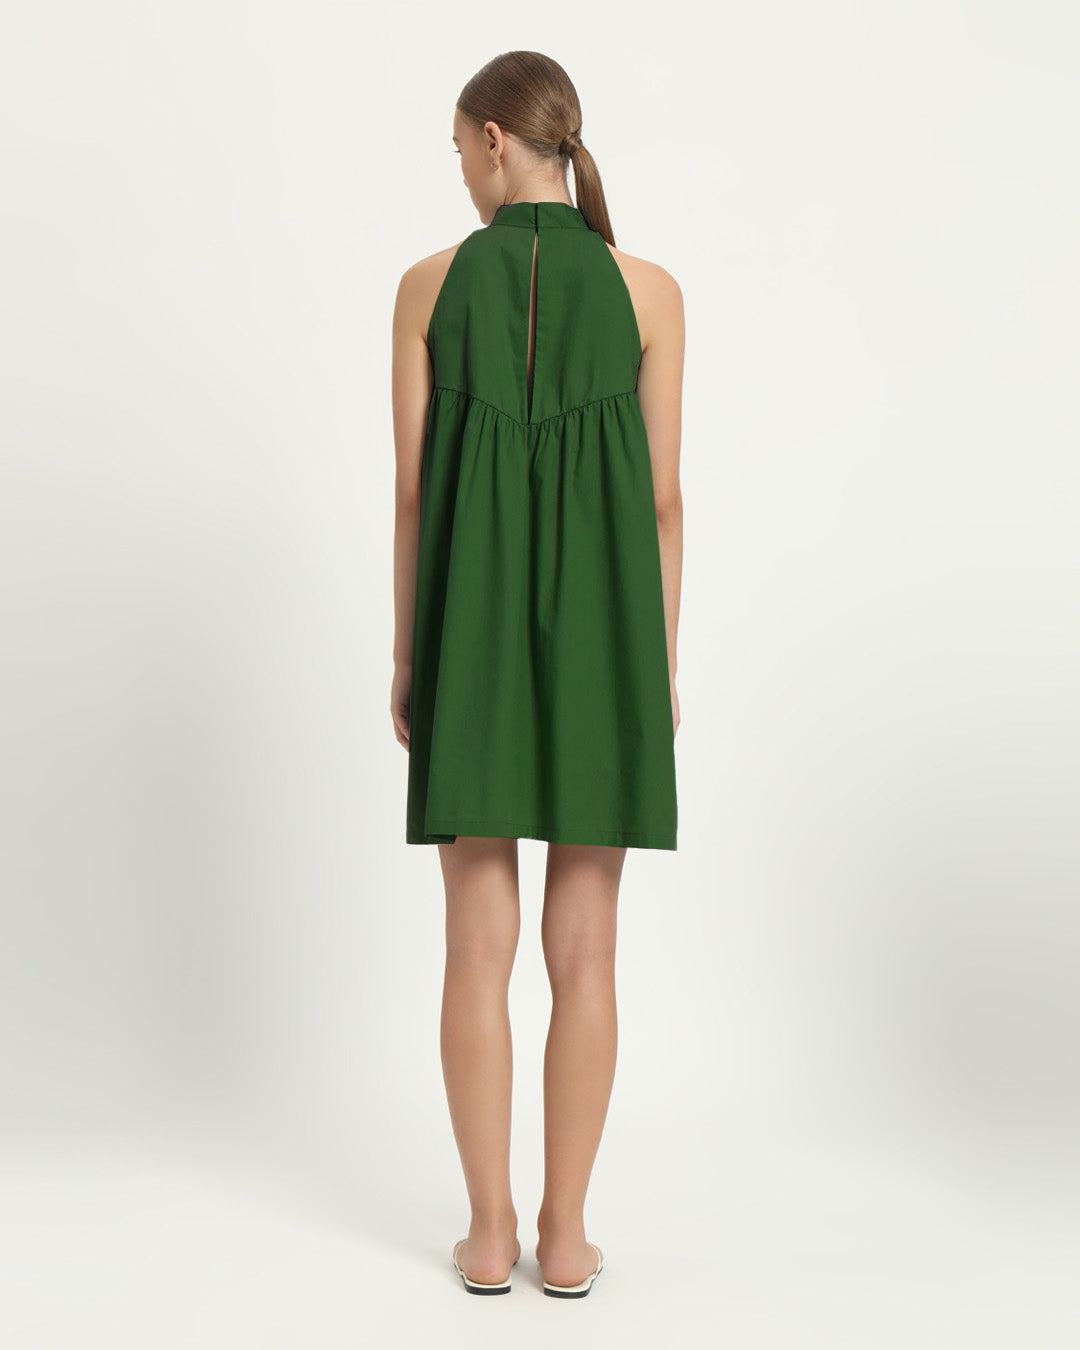 The Eruft Emerald Cotton Dress